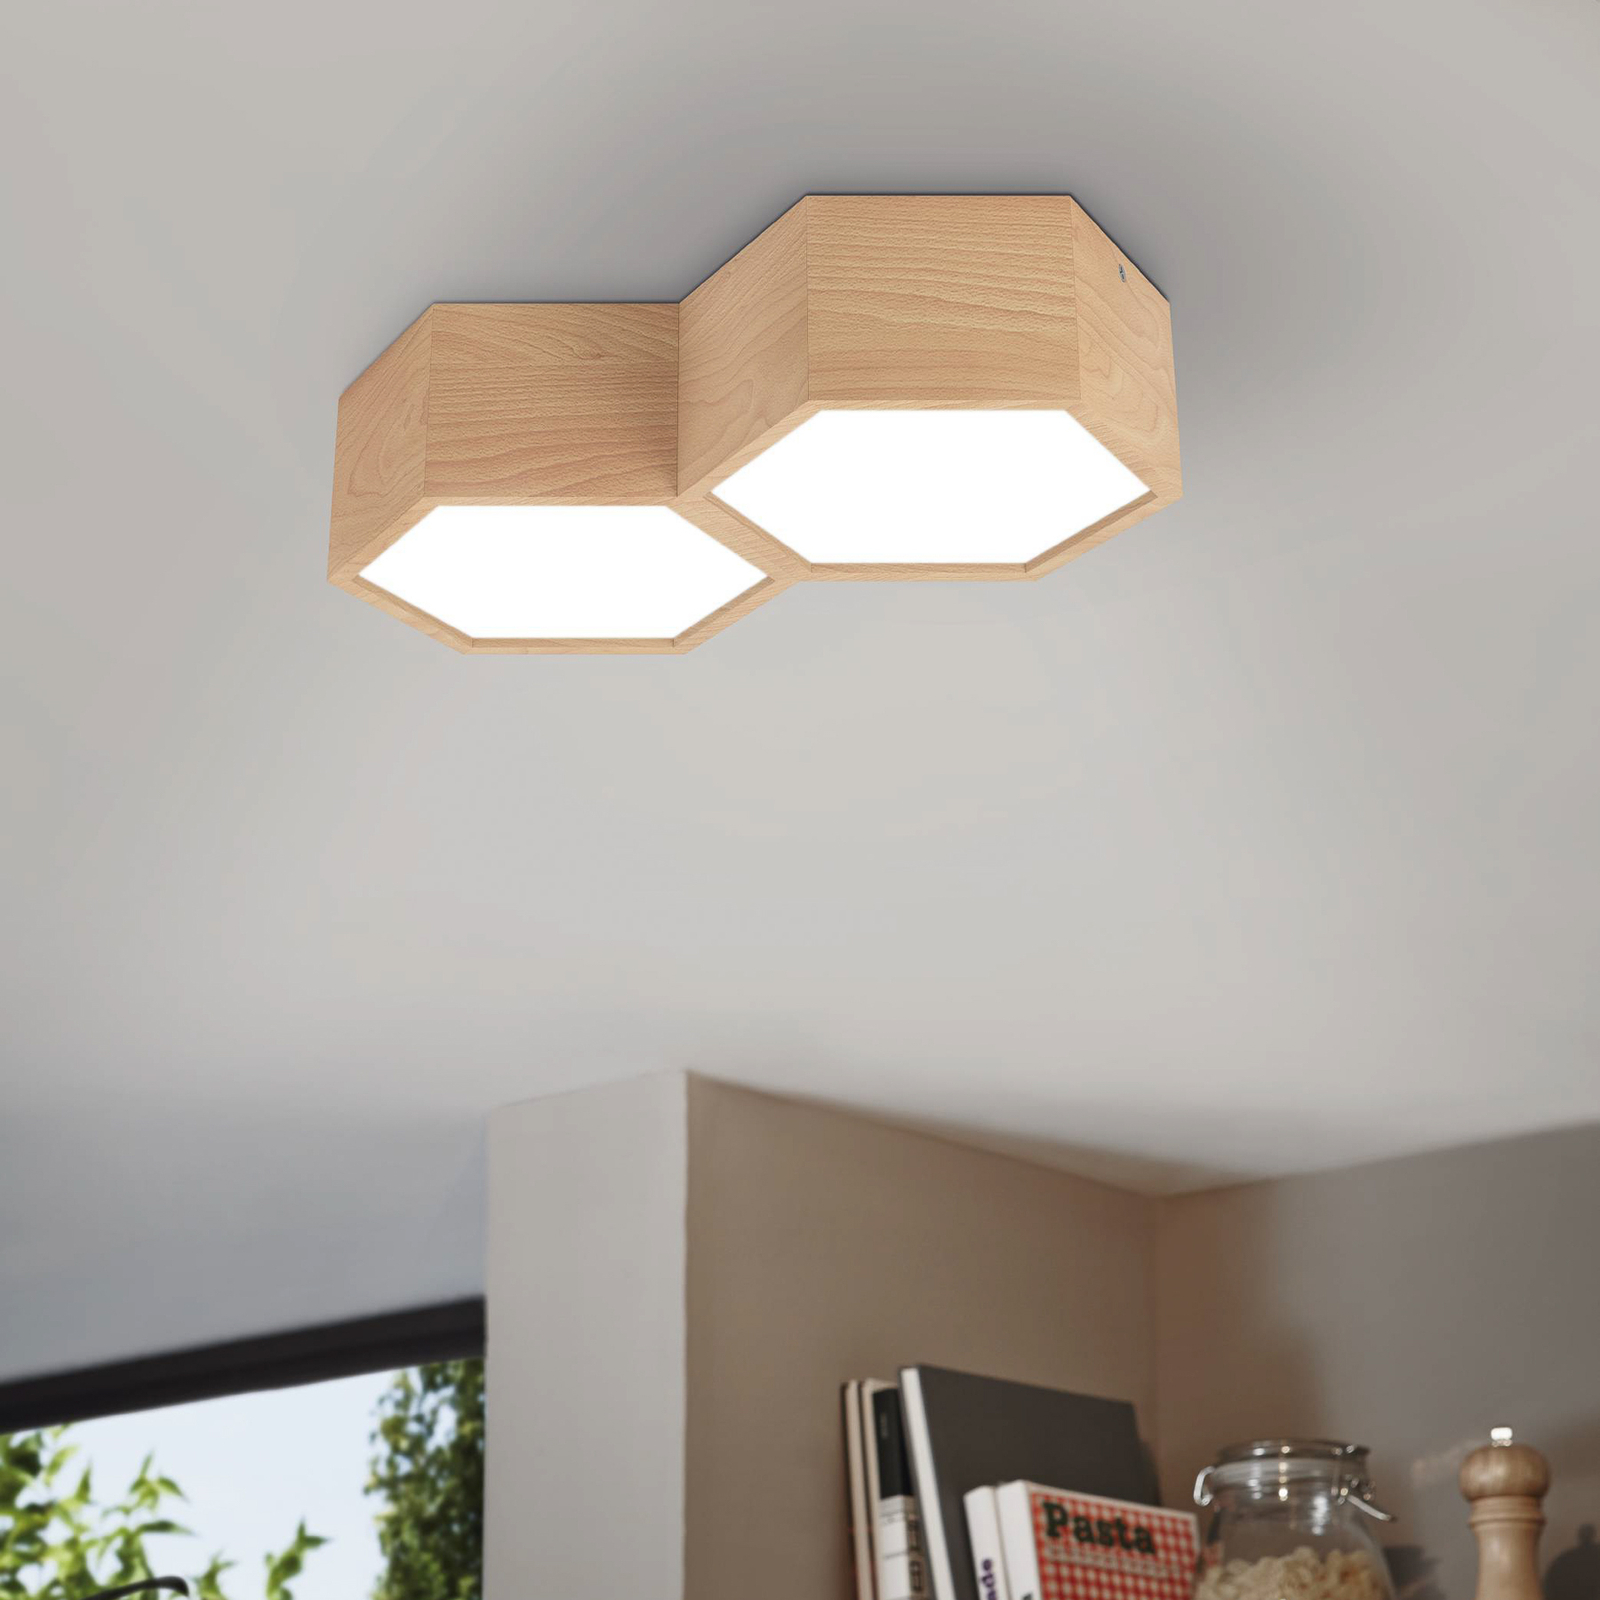 Mirlas ceiling light made of wood, 2-bulb